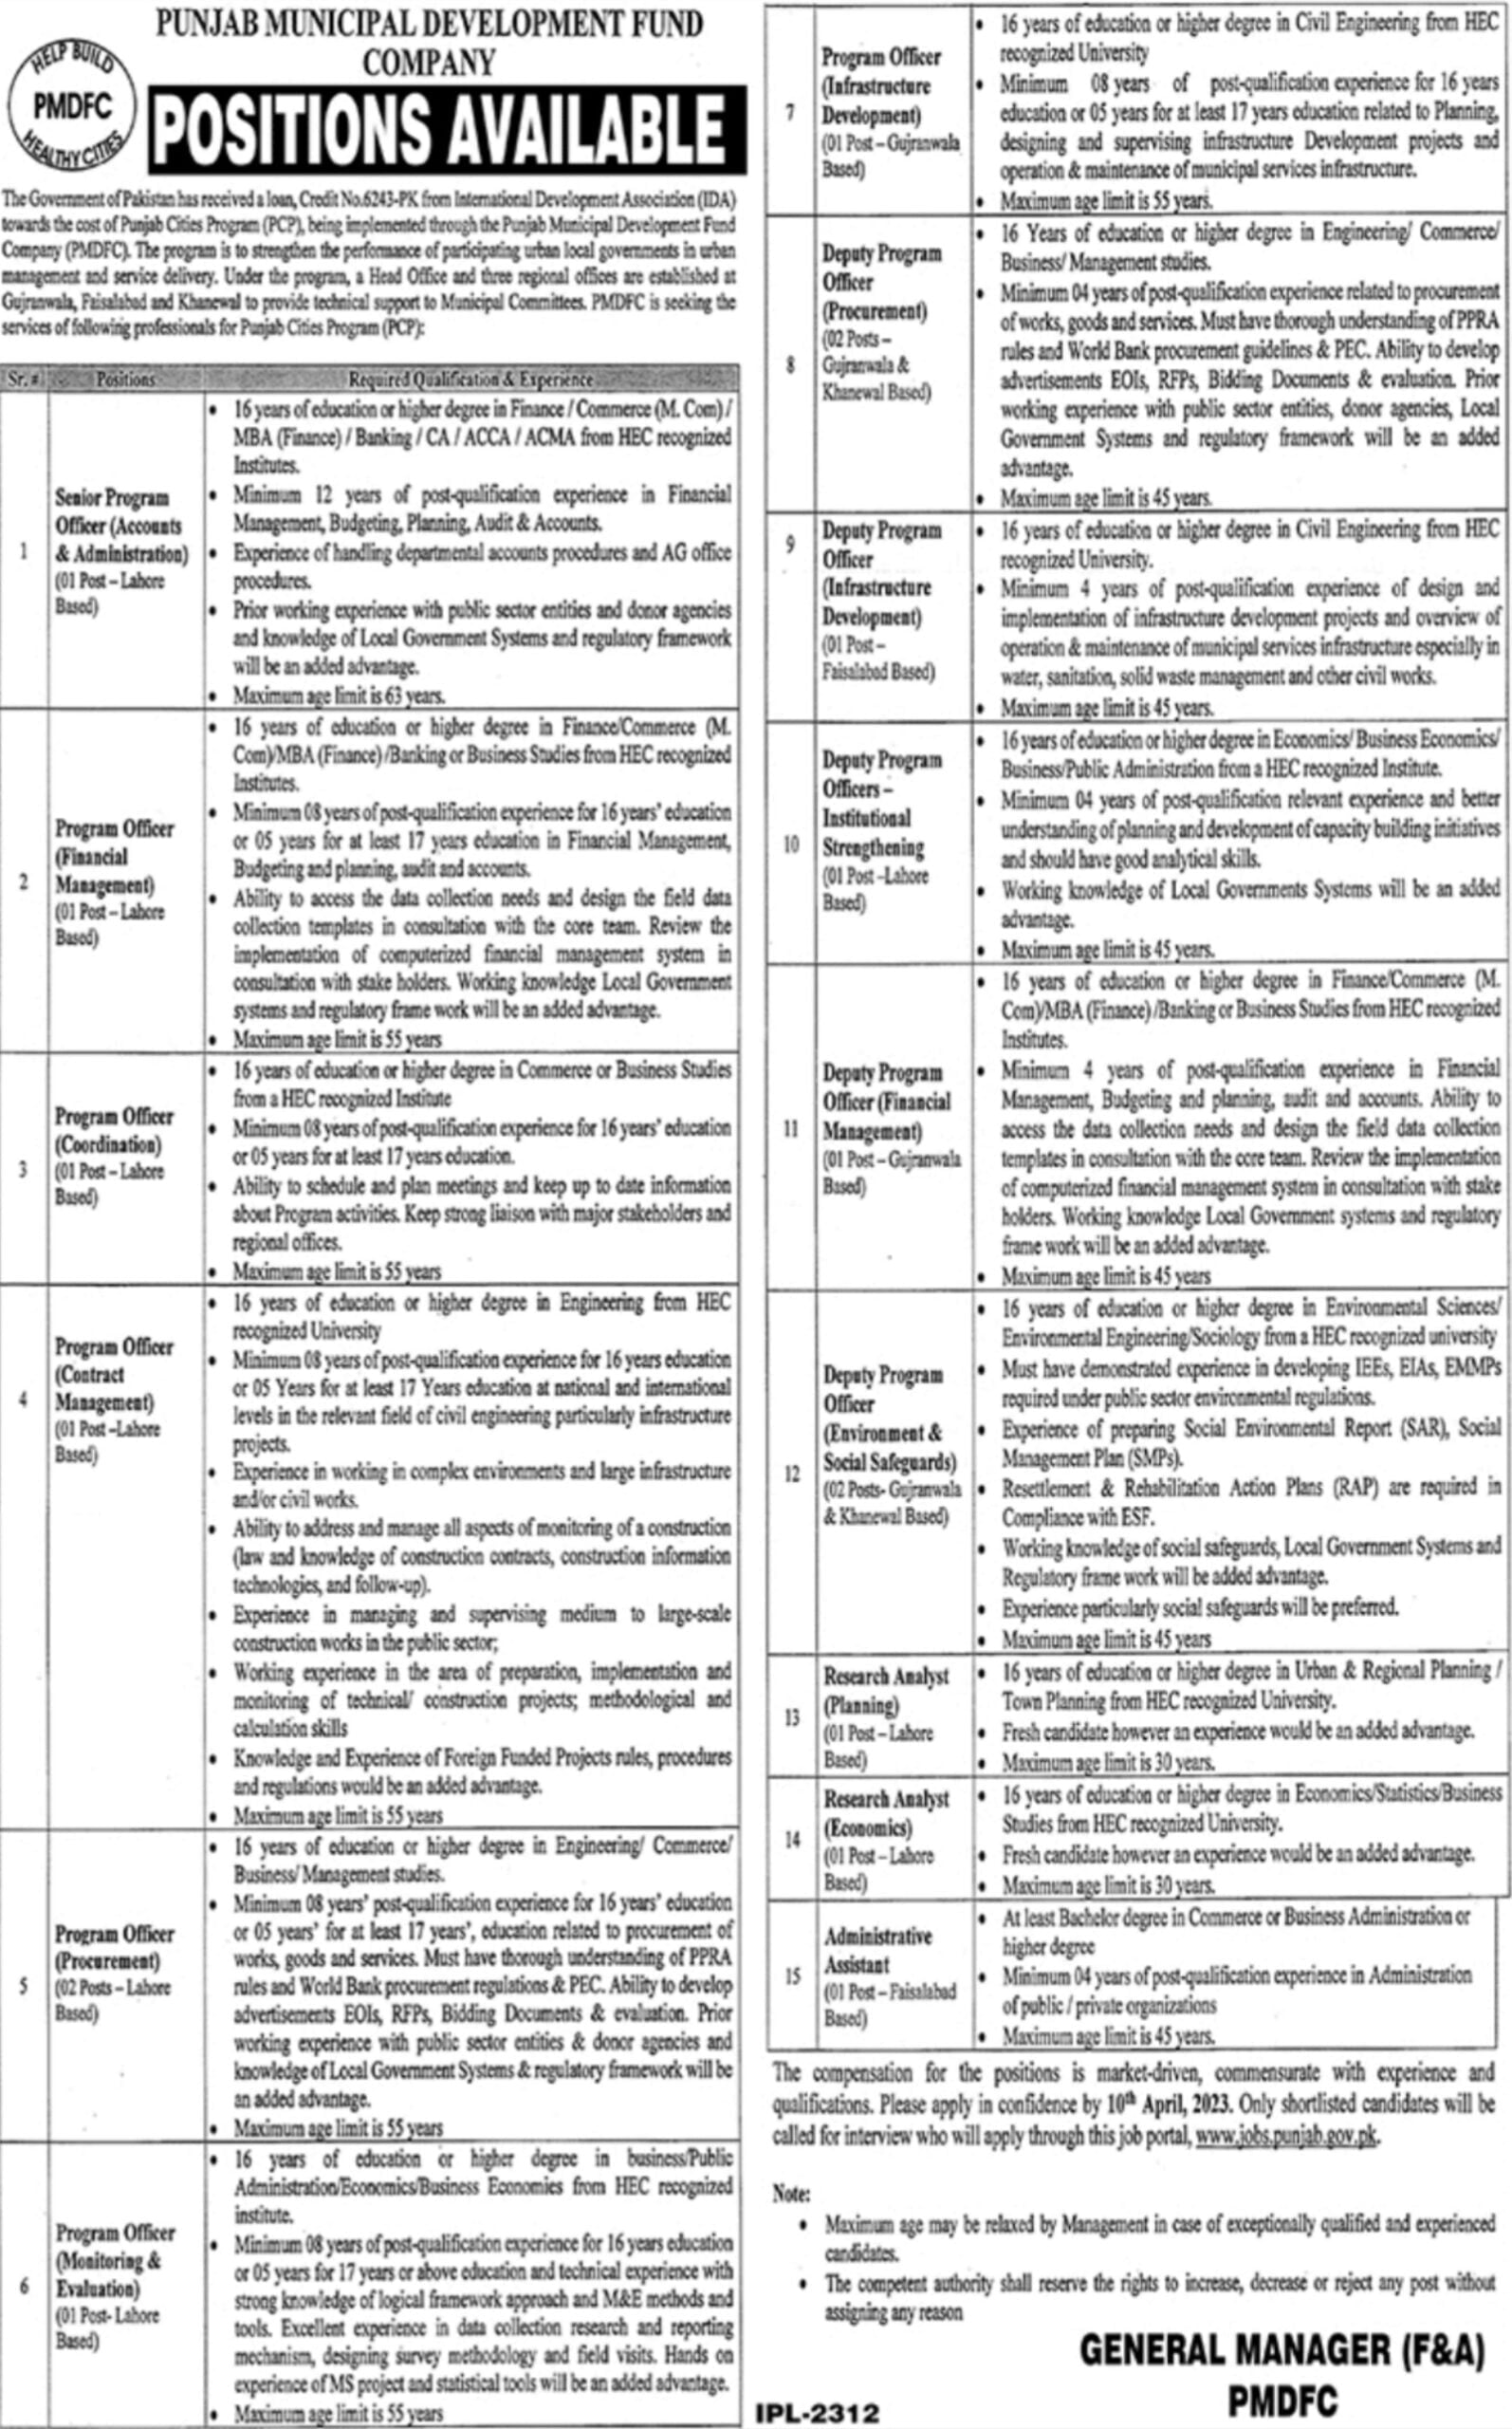 Latest jobs in Punjab Municipal Development Fund Company 2023